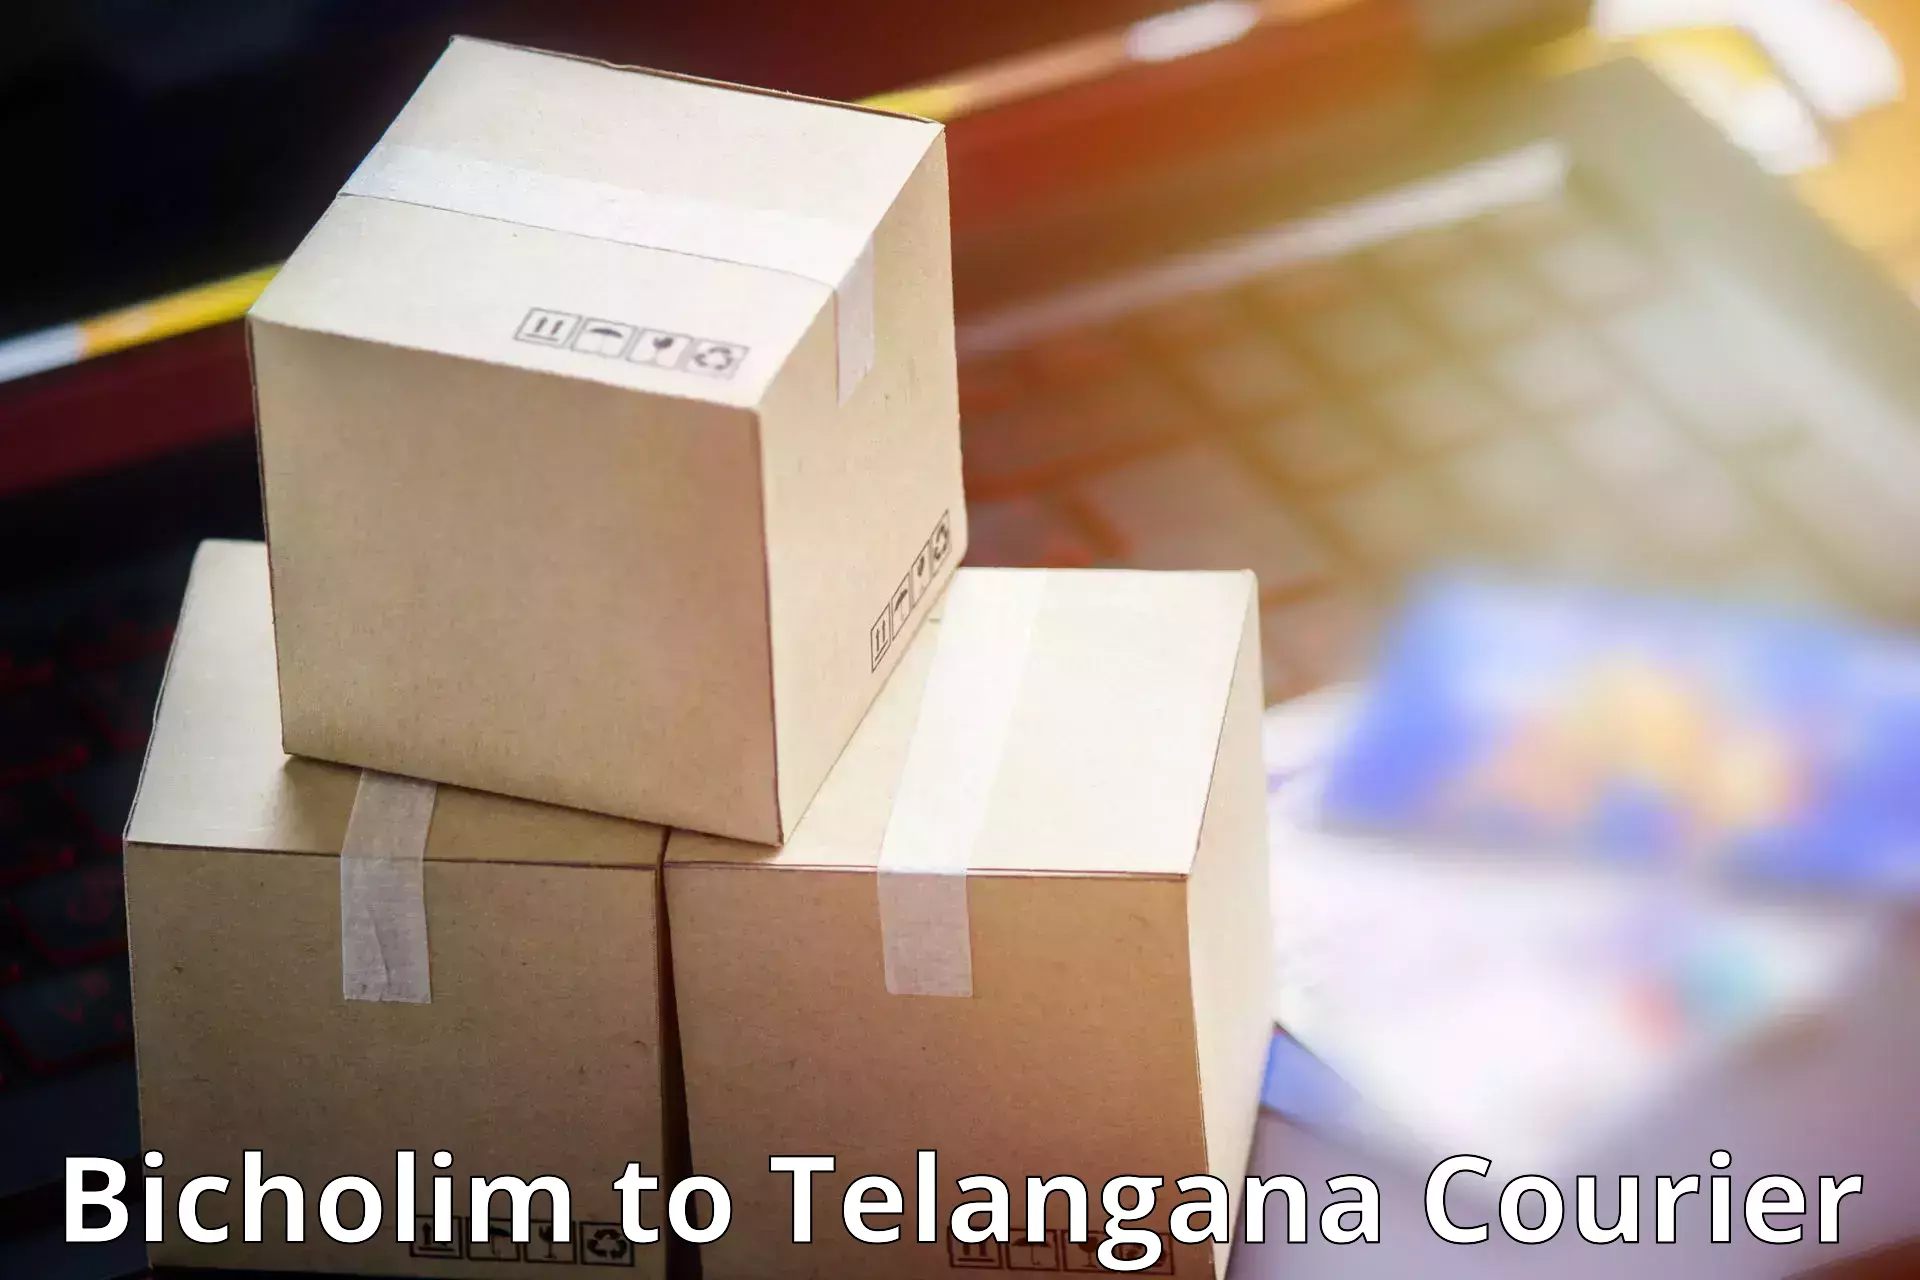 Courier service partnerships Bicholim to Telangana